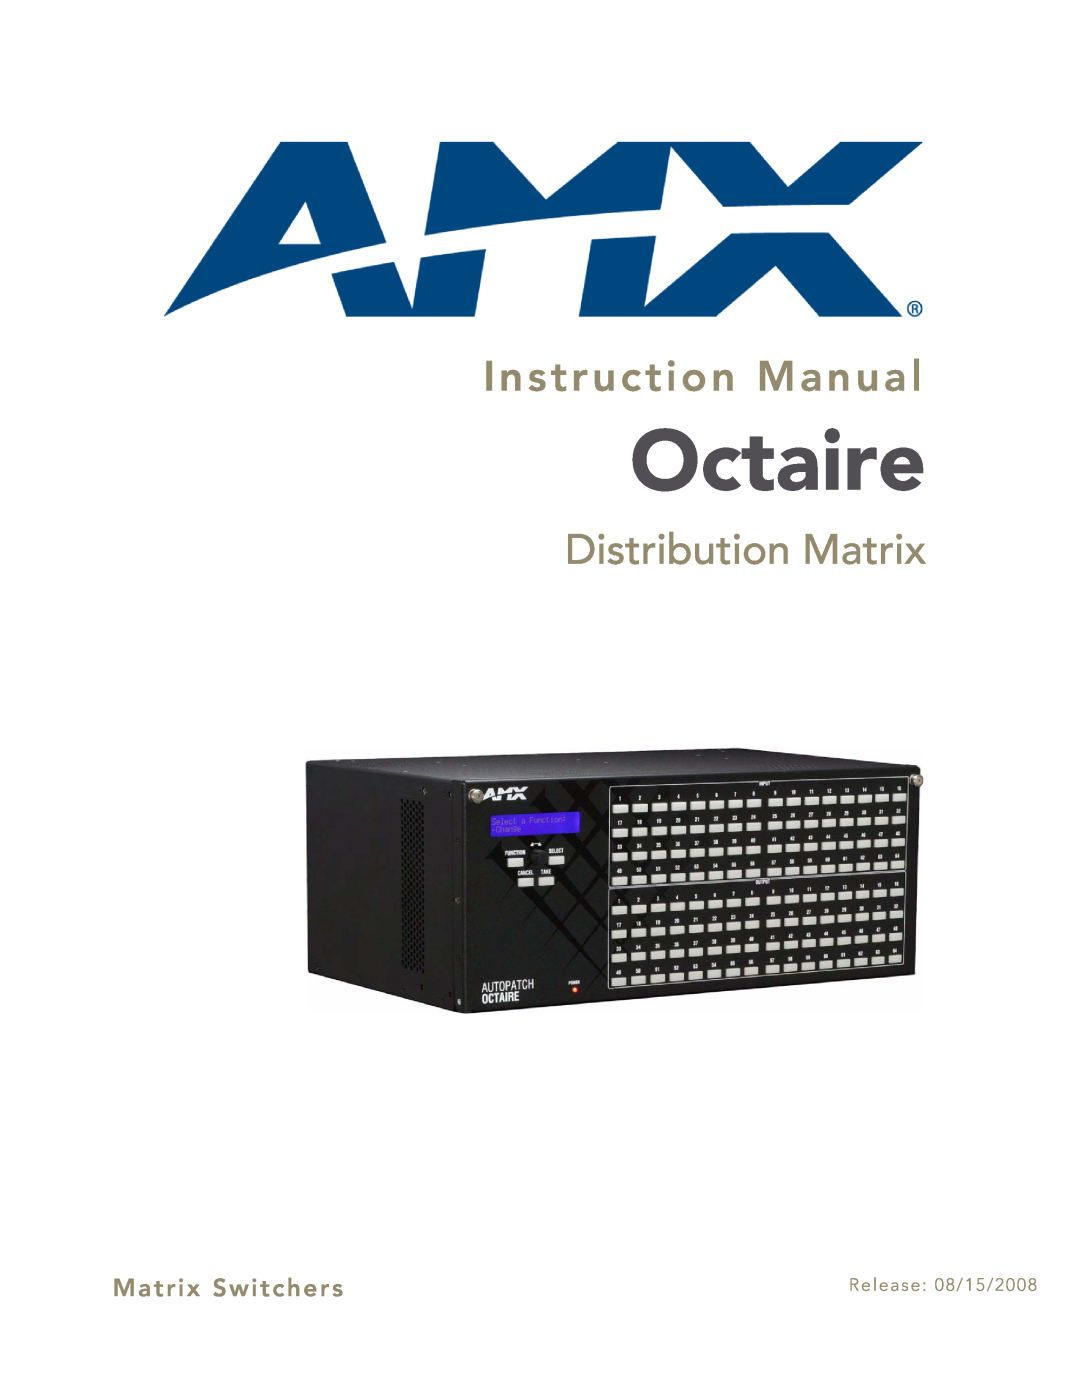 AMX Octaire instruction manual Instruction Manual, Distribution Matrix, Matrix Switchers, Release 08/15/2008 